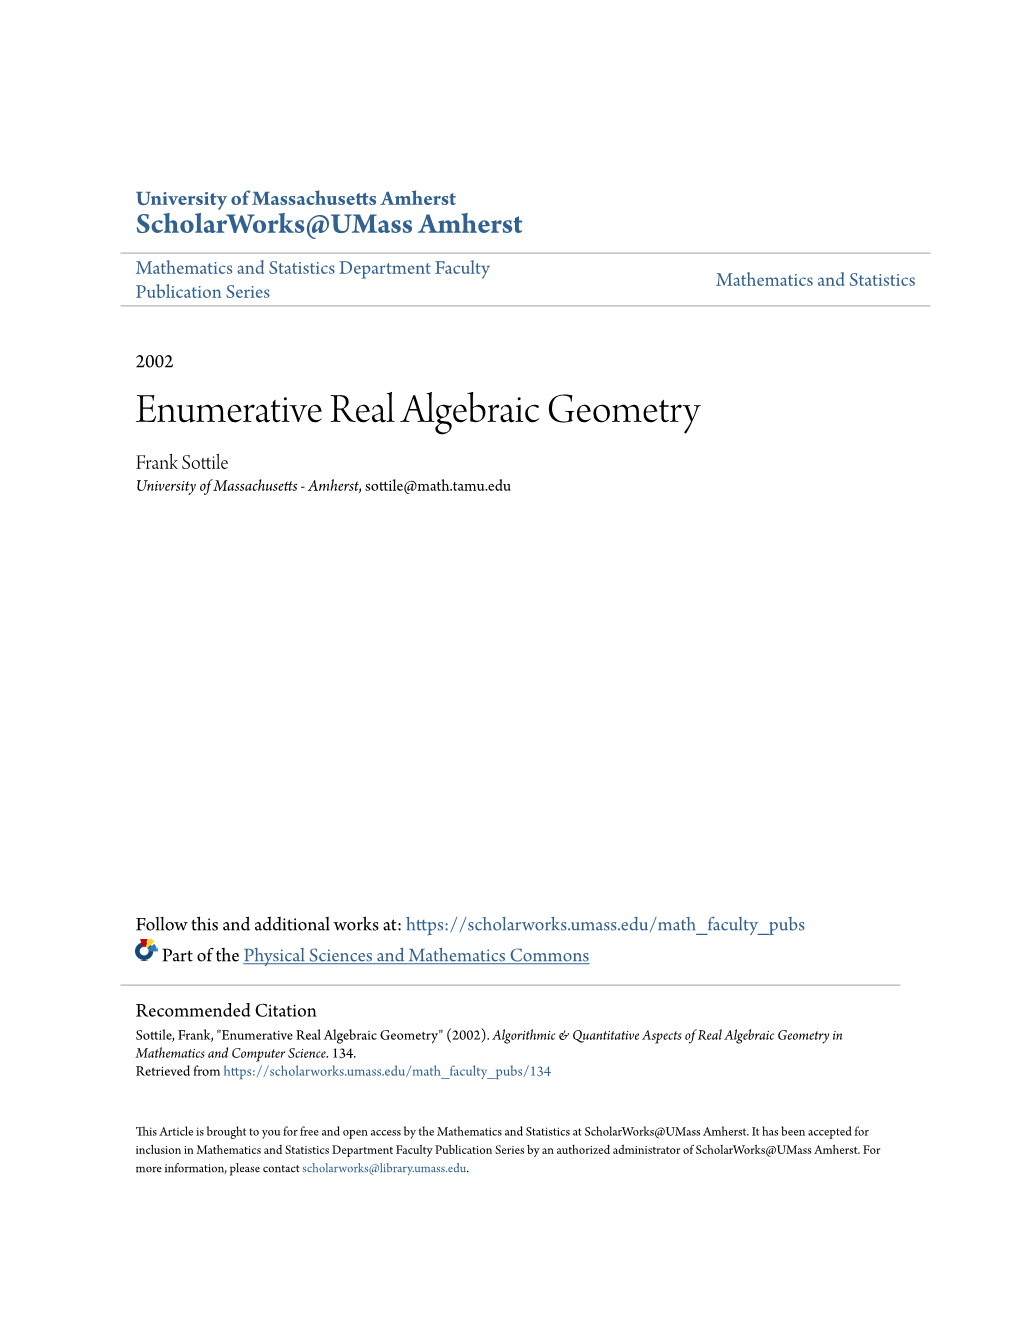 Enumerative Real Algebraic Geometry Frank Sottile University of Massachusetts - Amherst, Sottile@Math.Tamu.Edu